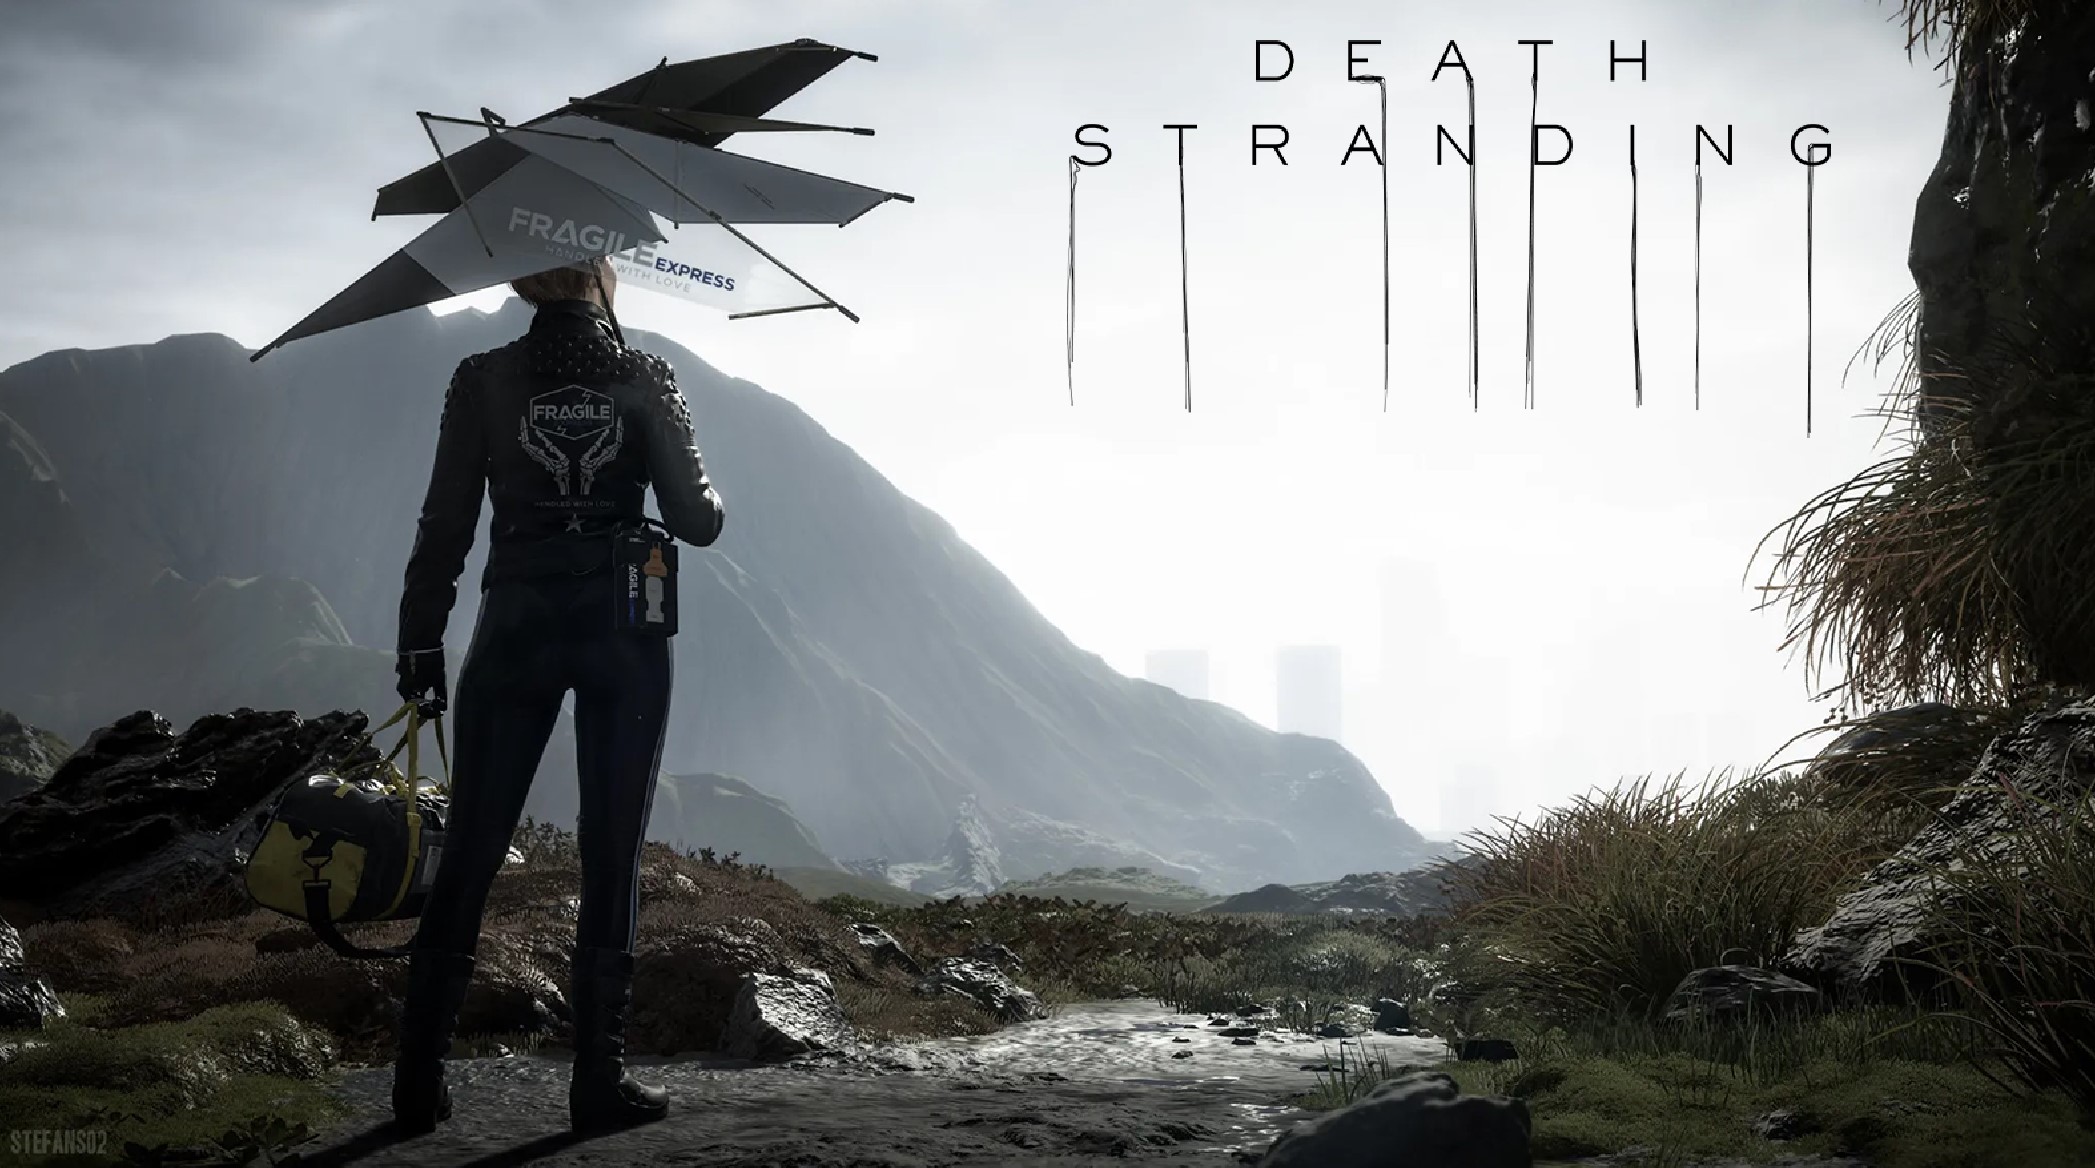 Hideo Kojima won't direct Death Stranding movie